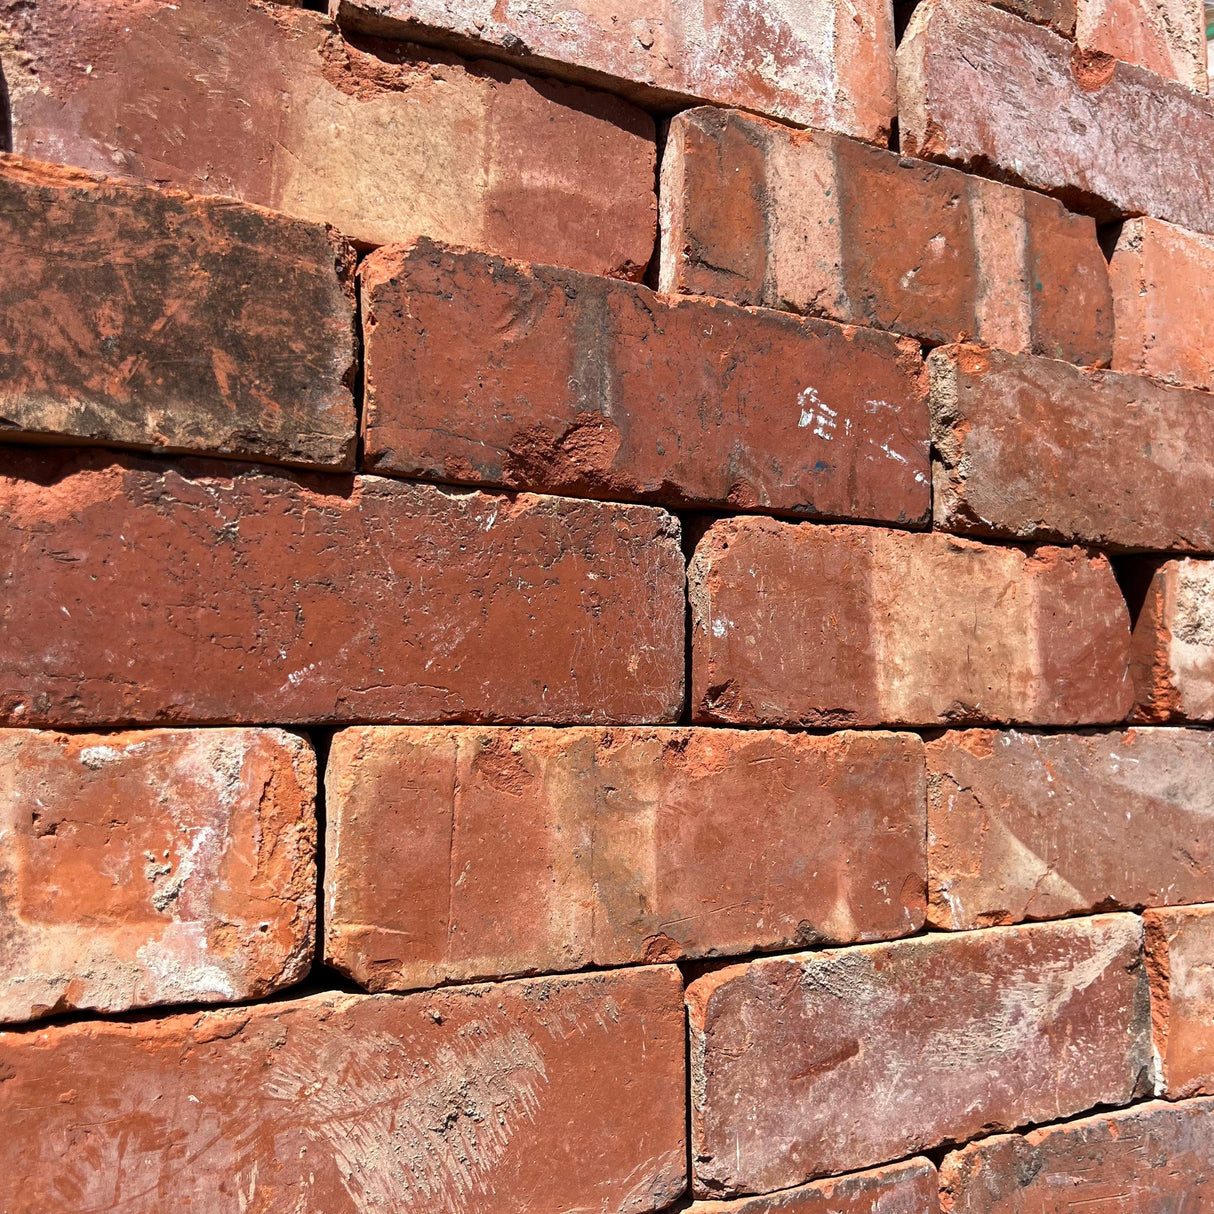 Reclaimed Cafferata Imperial Bricks | Pack of 250 Bricks | Free Delivery - Reclaimed Brick Company